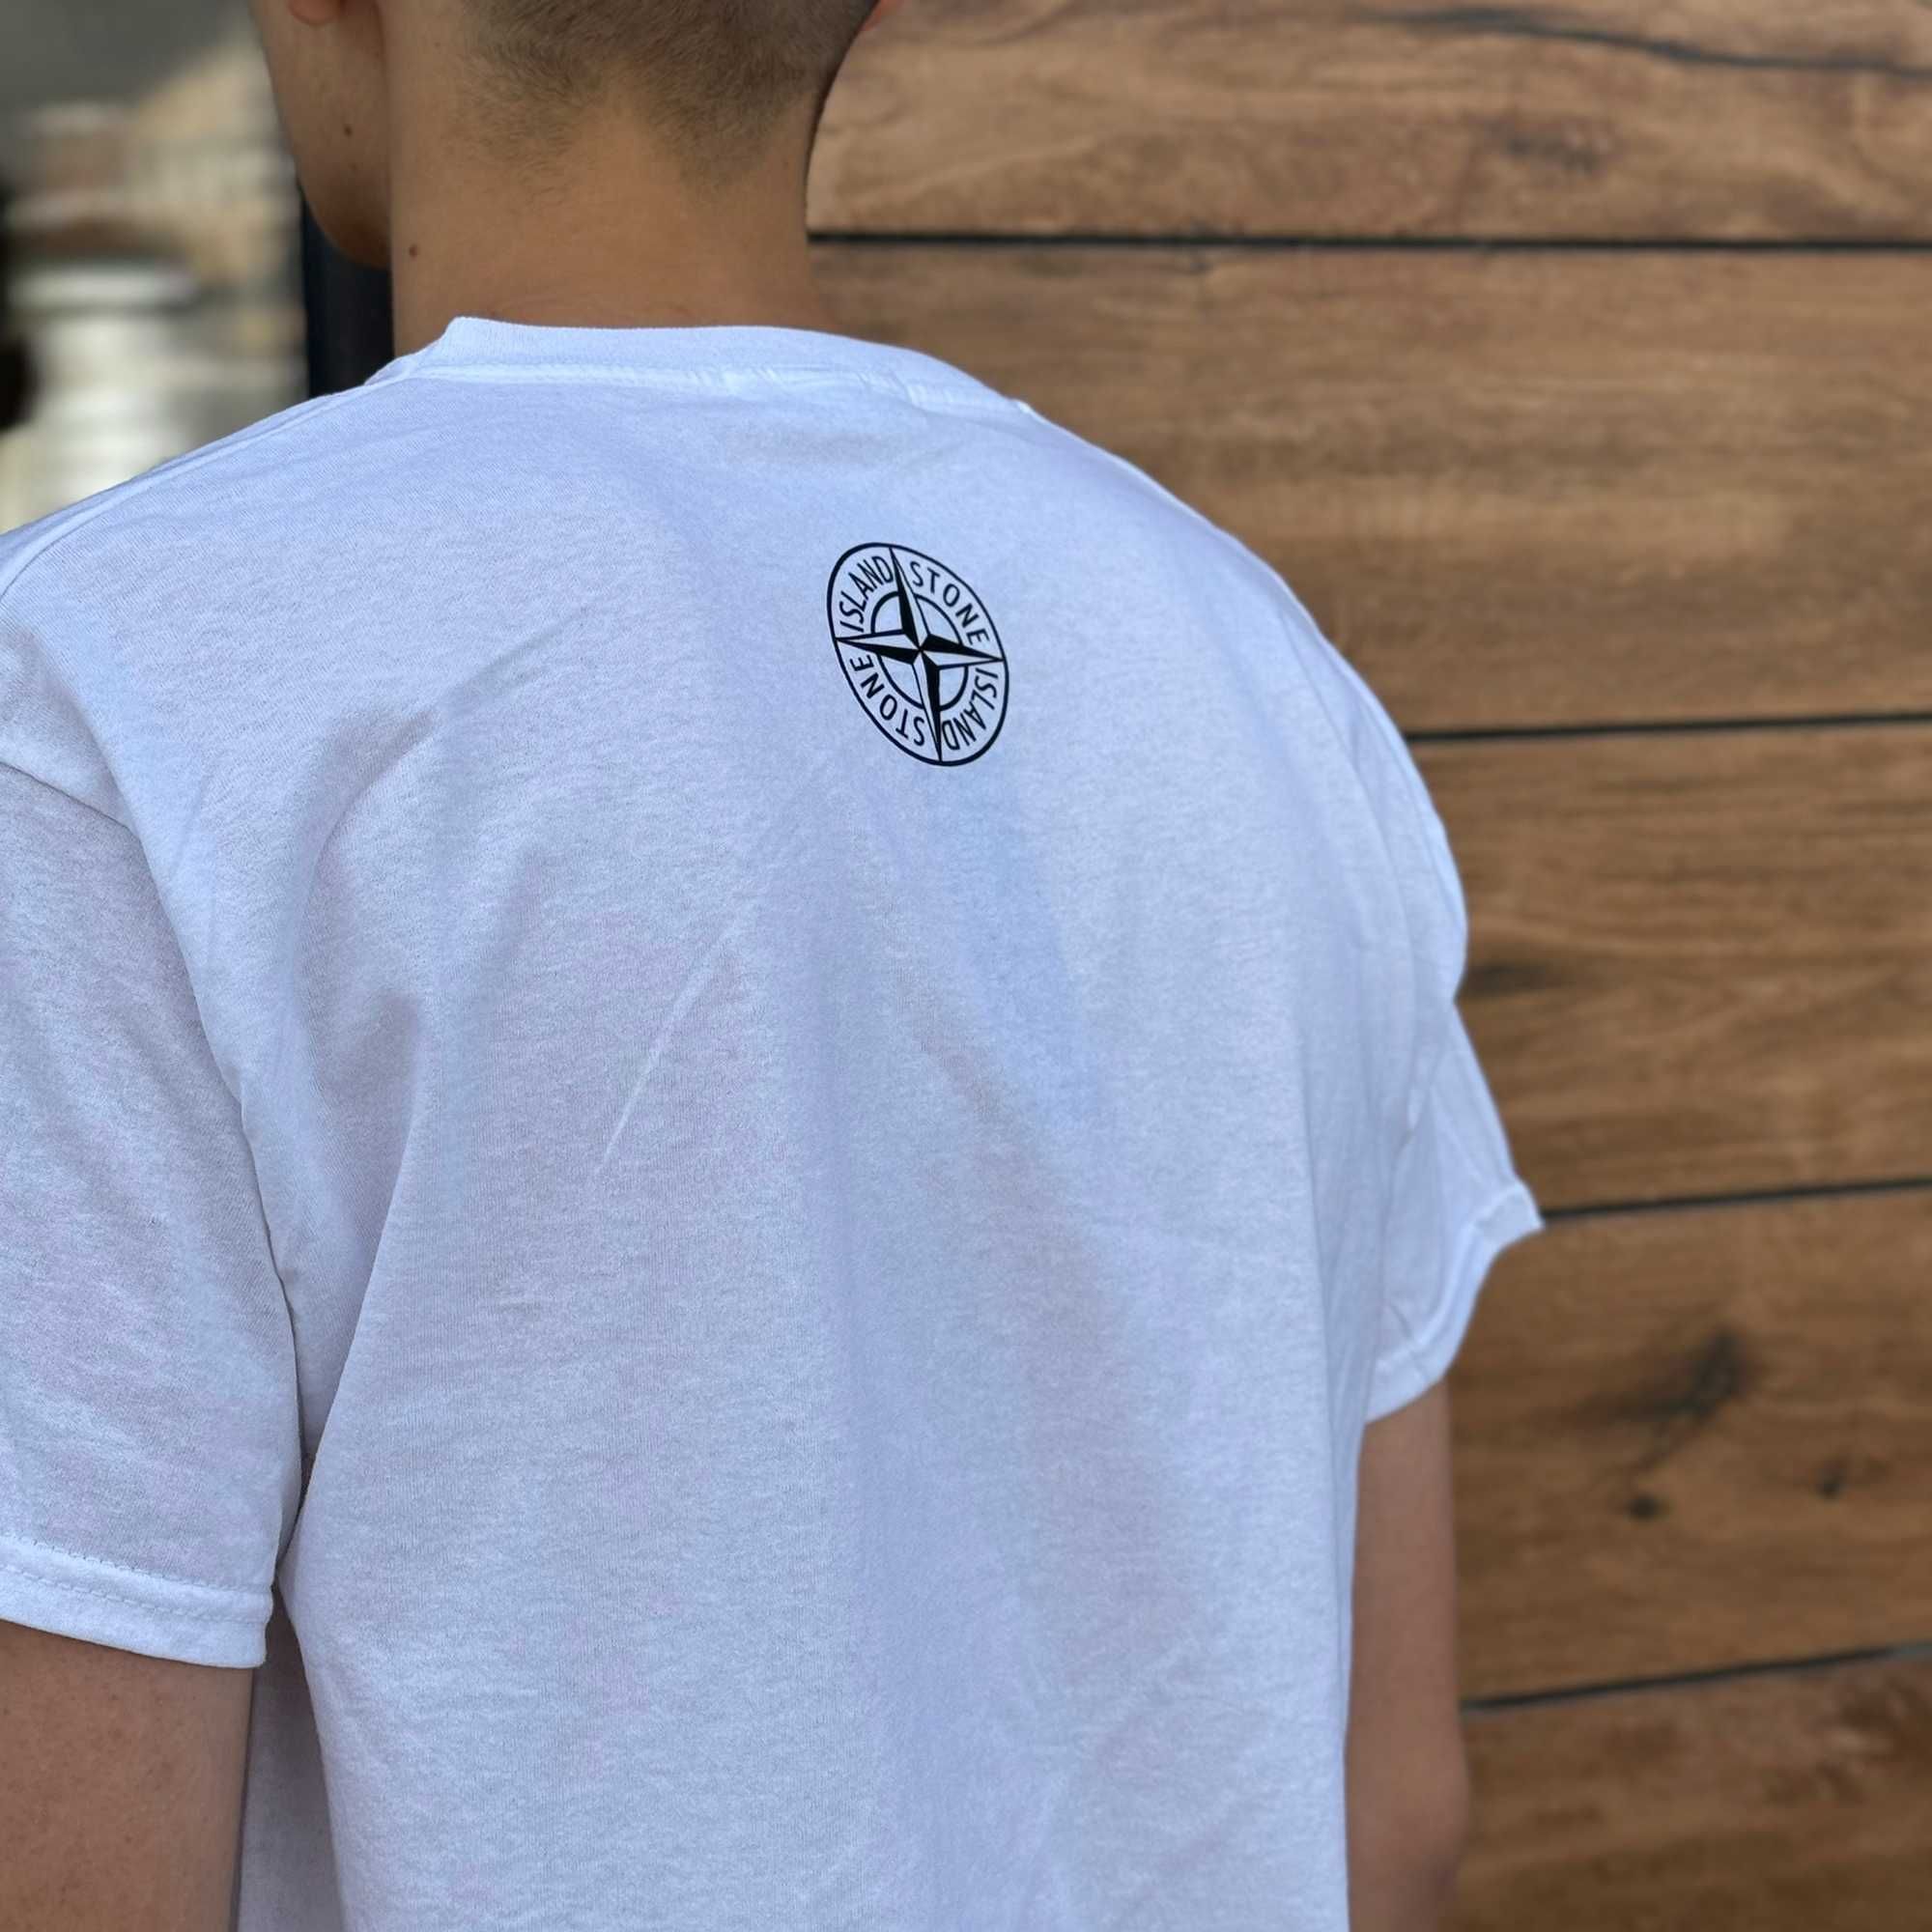 S.I | Stone Island футболка новая мужская | Стон Айленд футболки